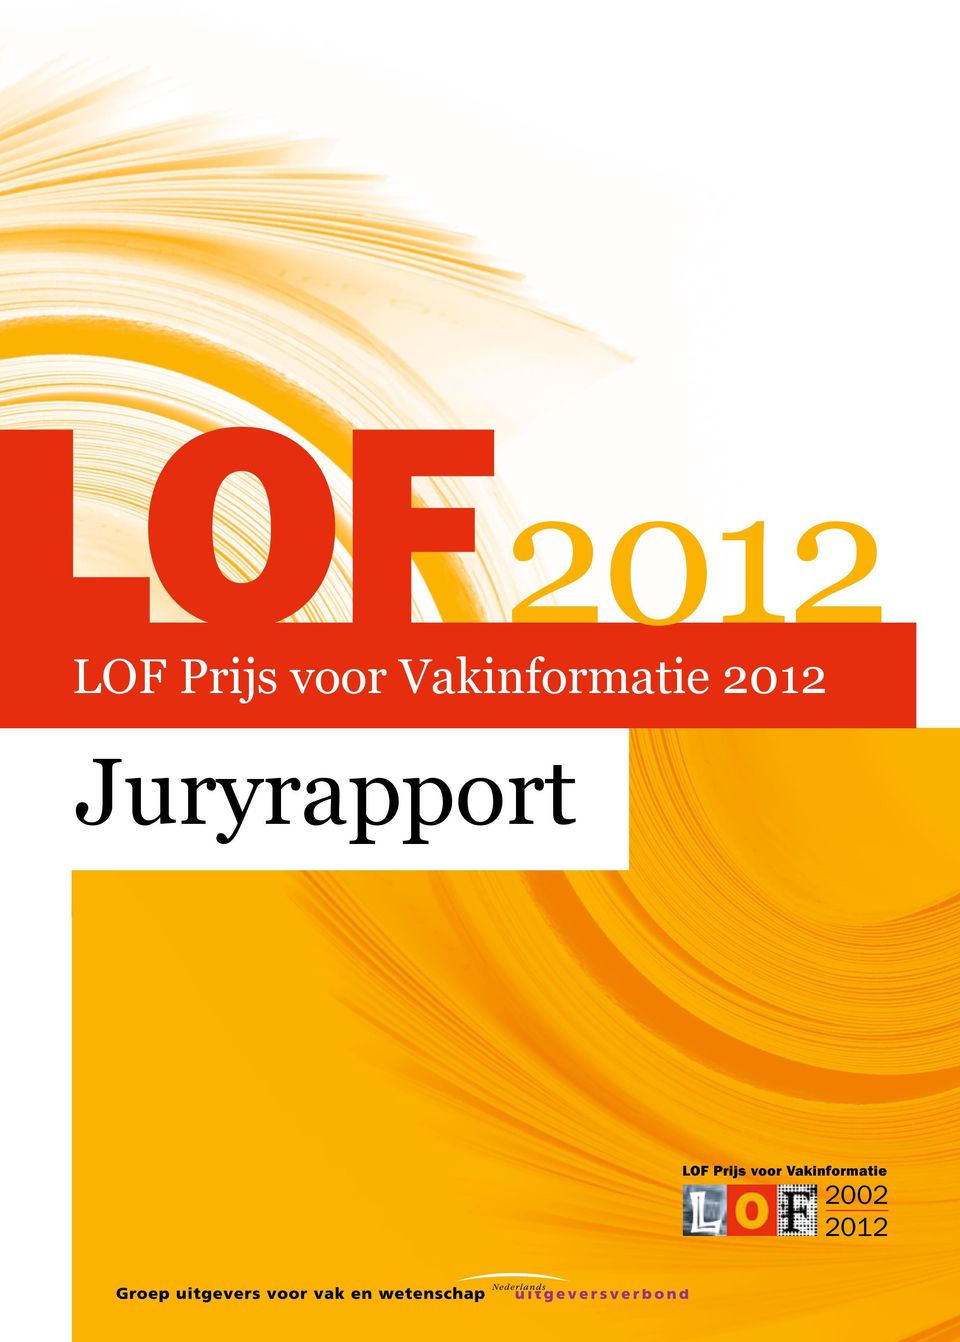 Juryrapport LOF Prijs